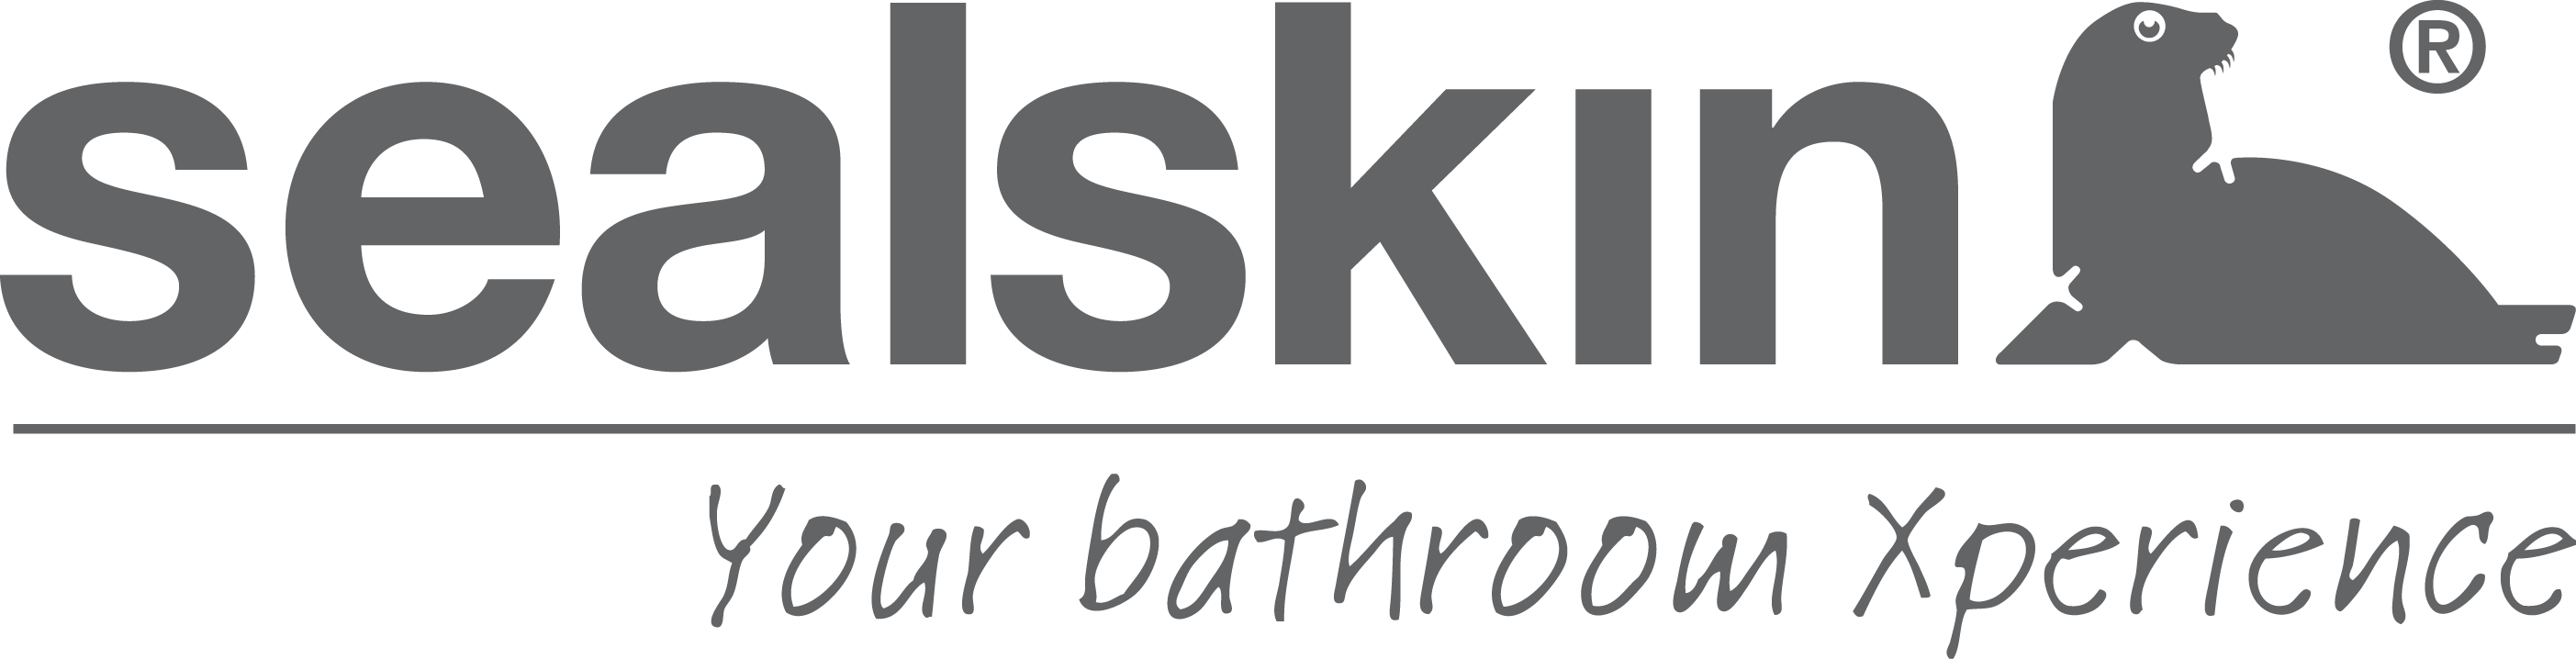 Sealskin logo